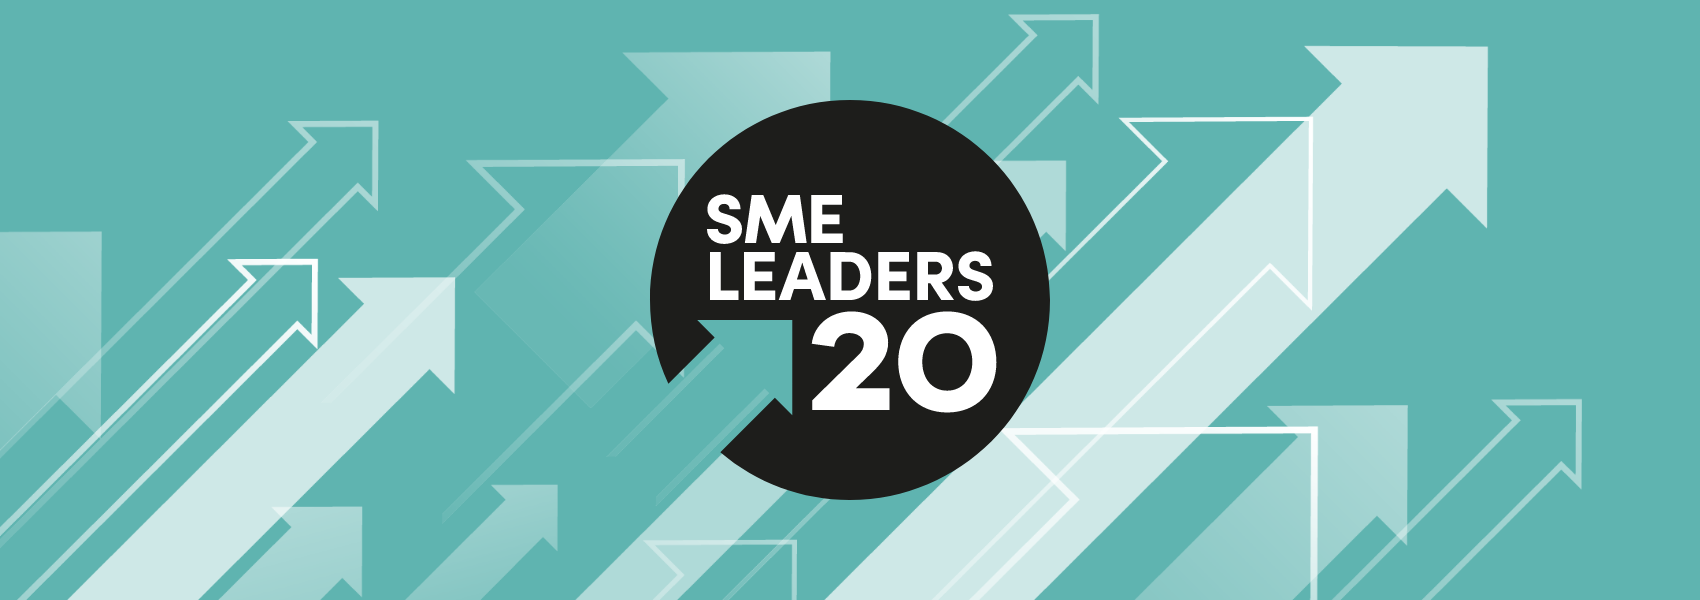 SME Leaders 20